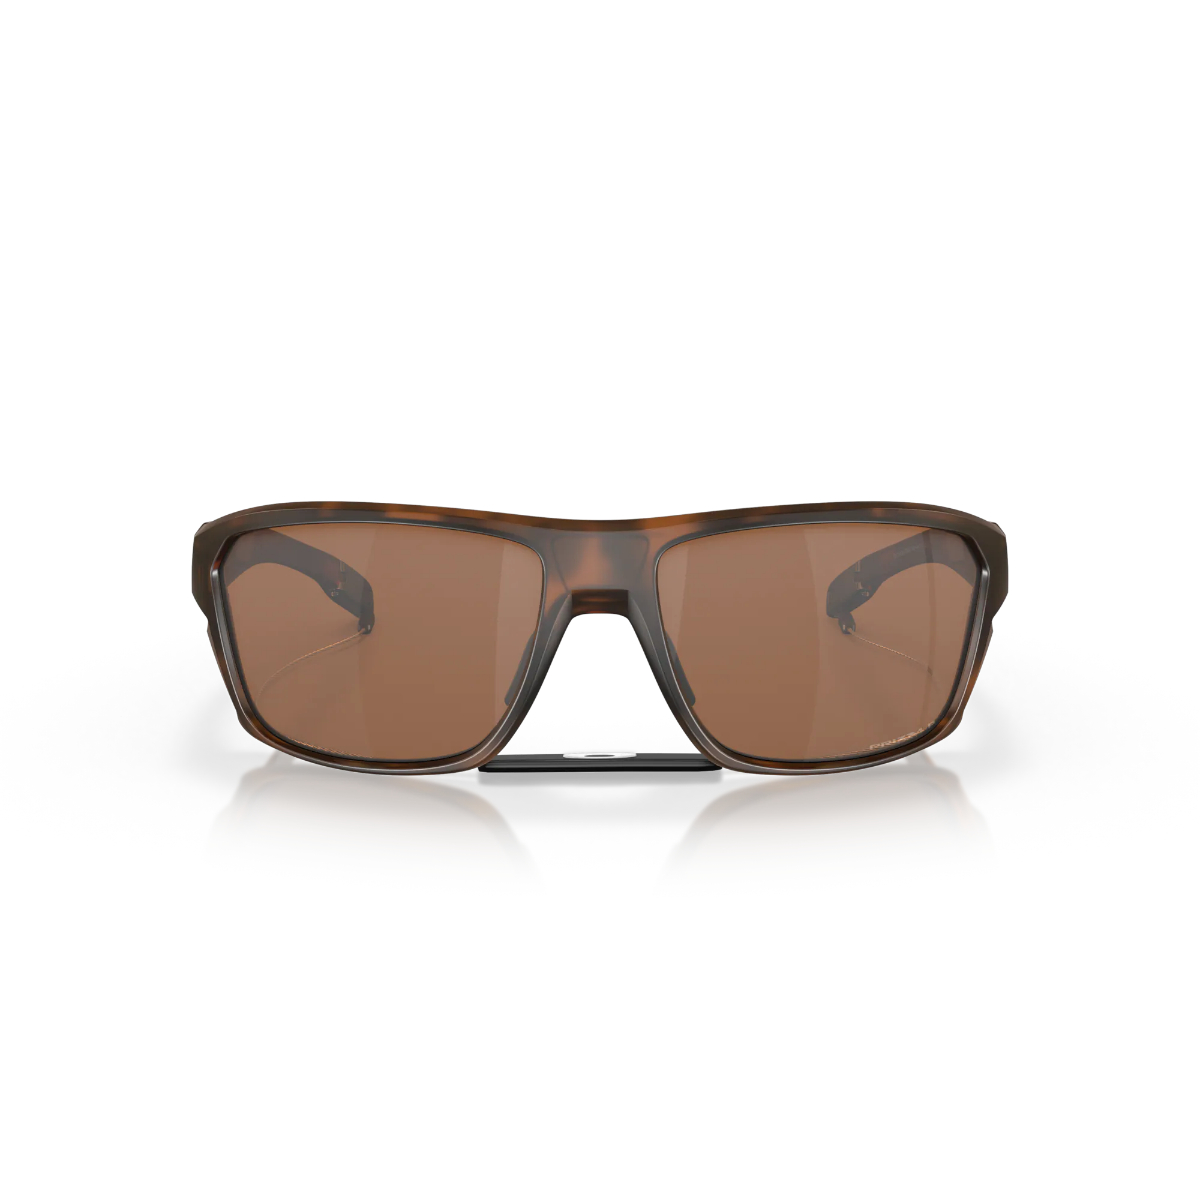 Oakley Split Shot Polarized Sunglasses - Matte Brown Tortoise/Prizm Tungsten